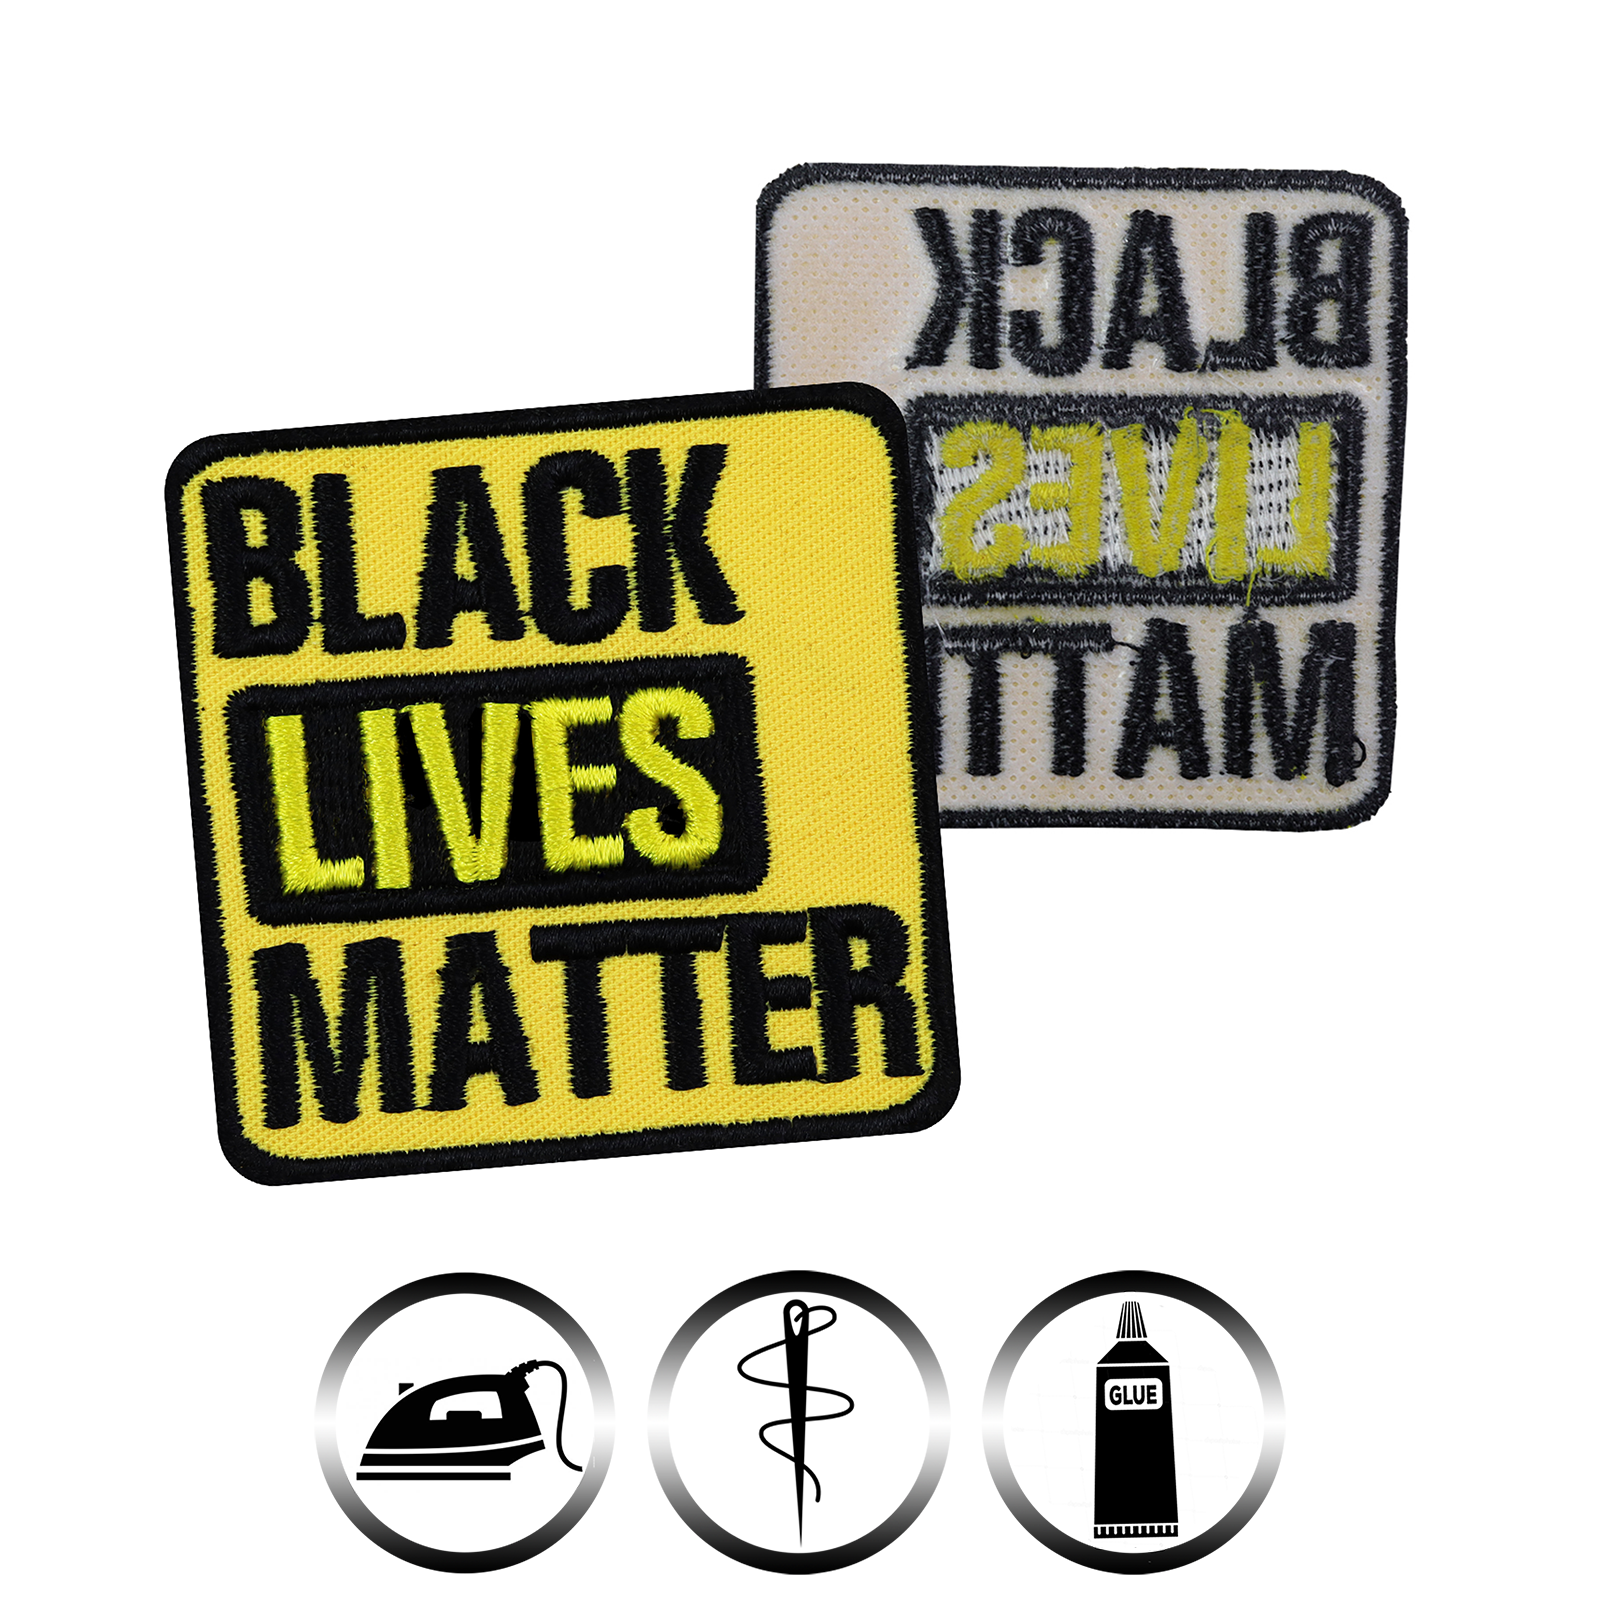 Black lives matter - Patch